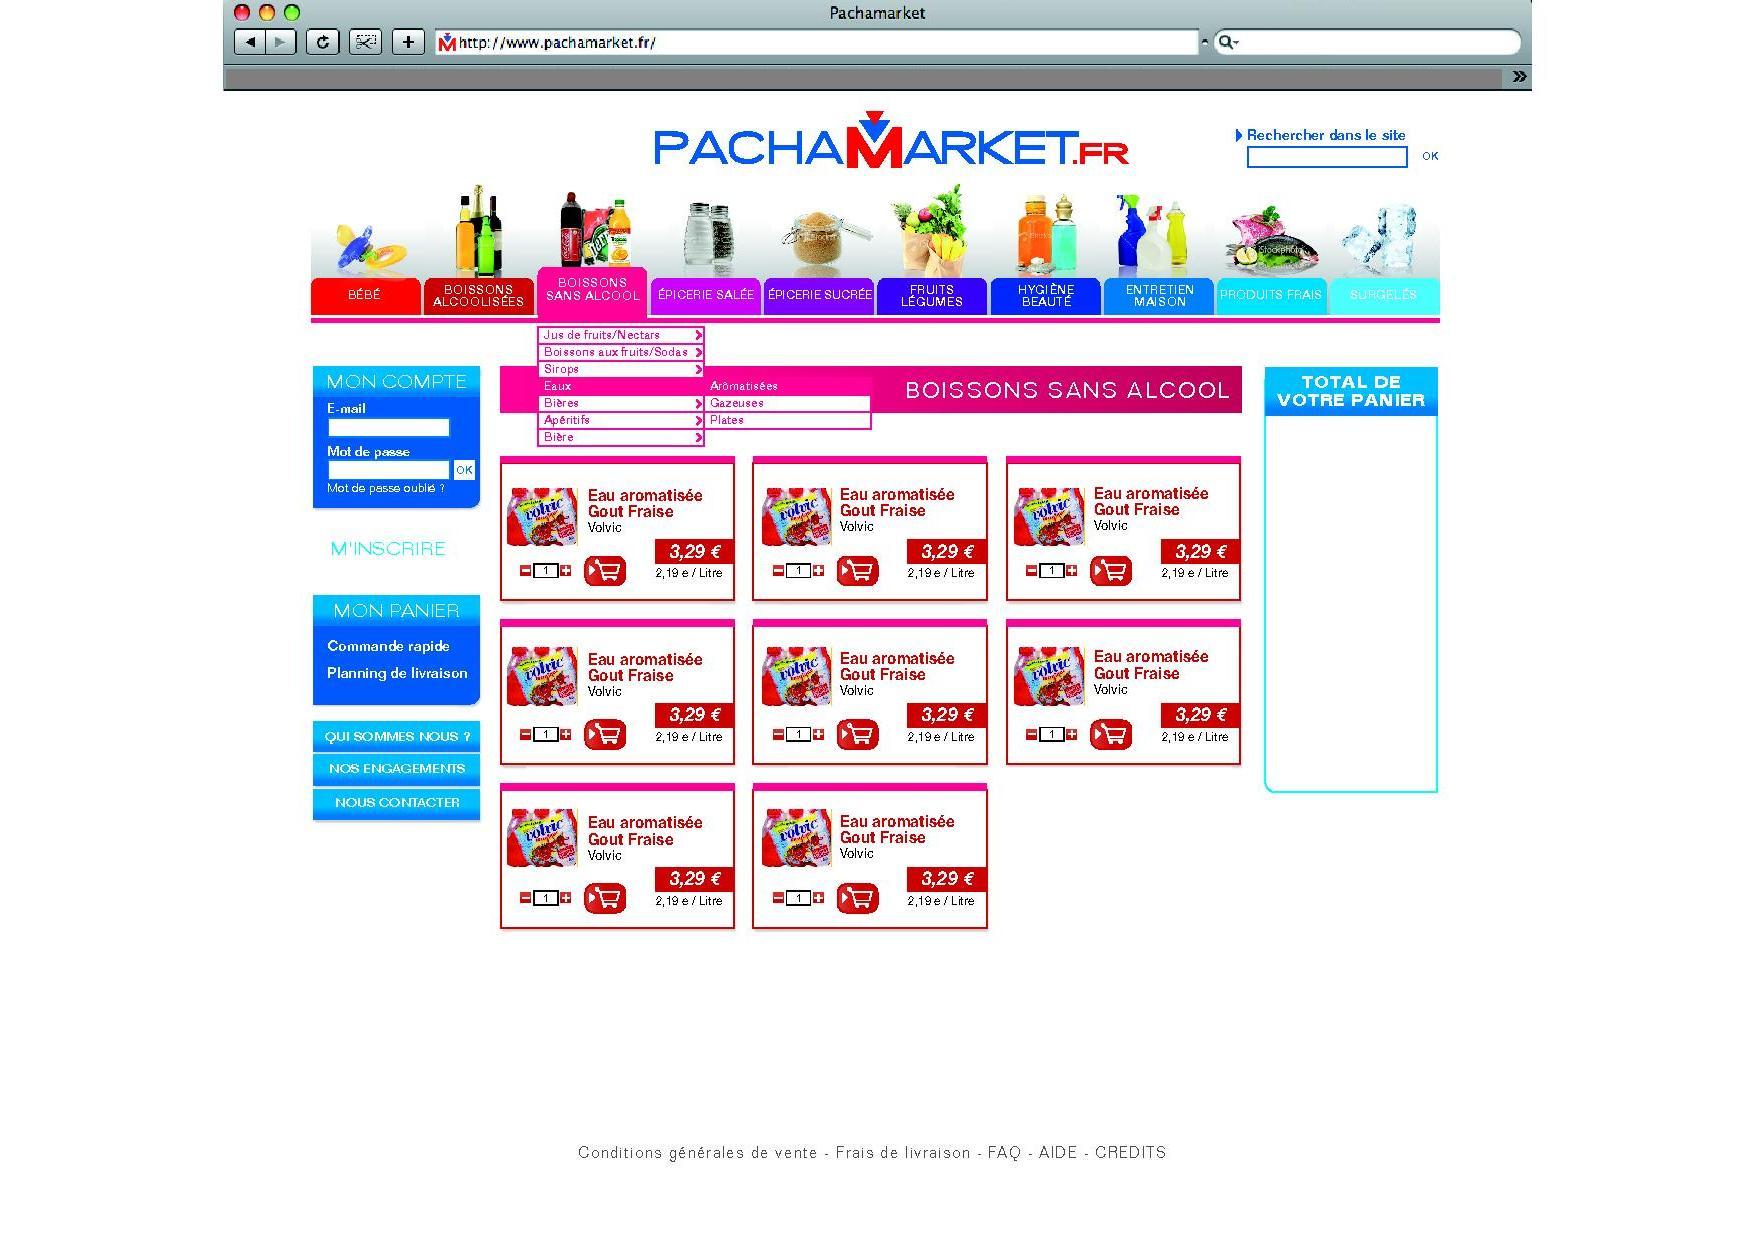 pachamarket-new-page.jpg